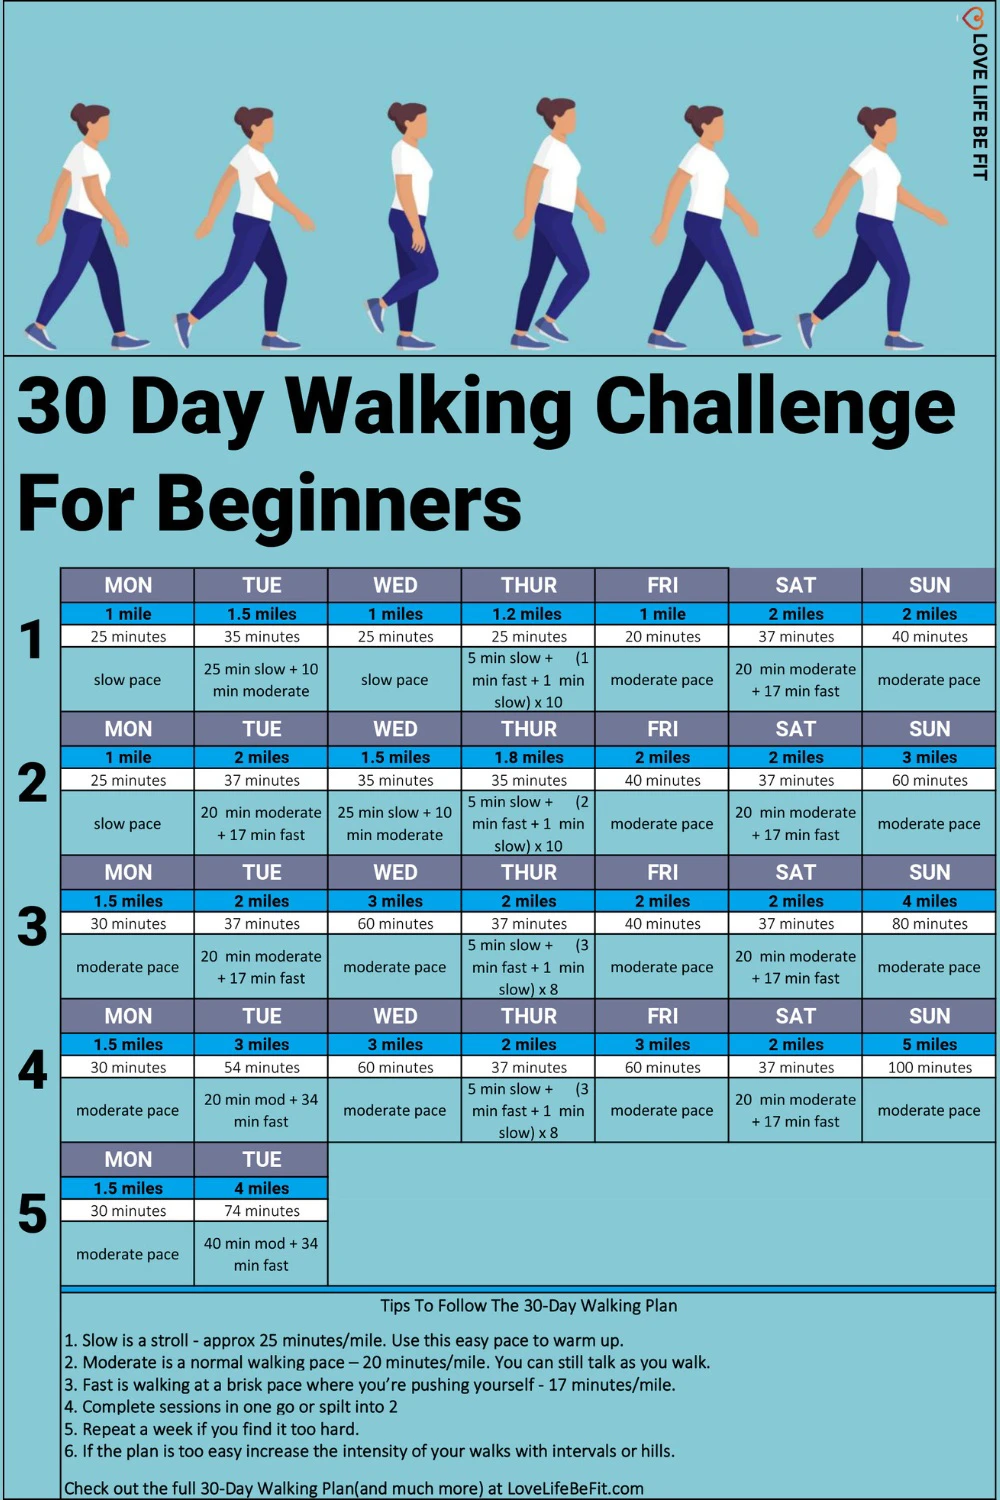 30 Day Walking Challenge For Beginners - Free printable training plan